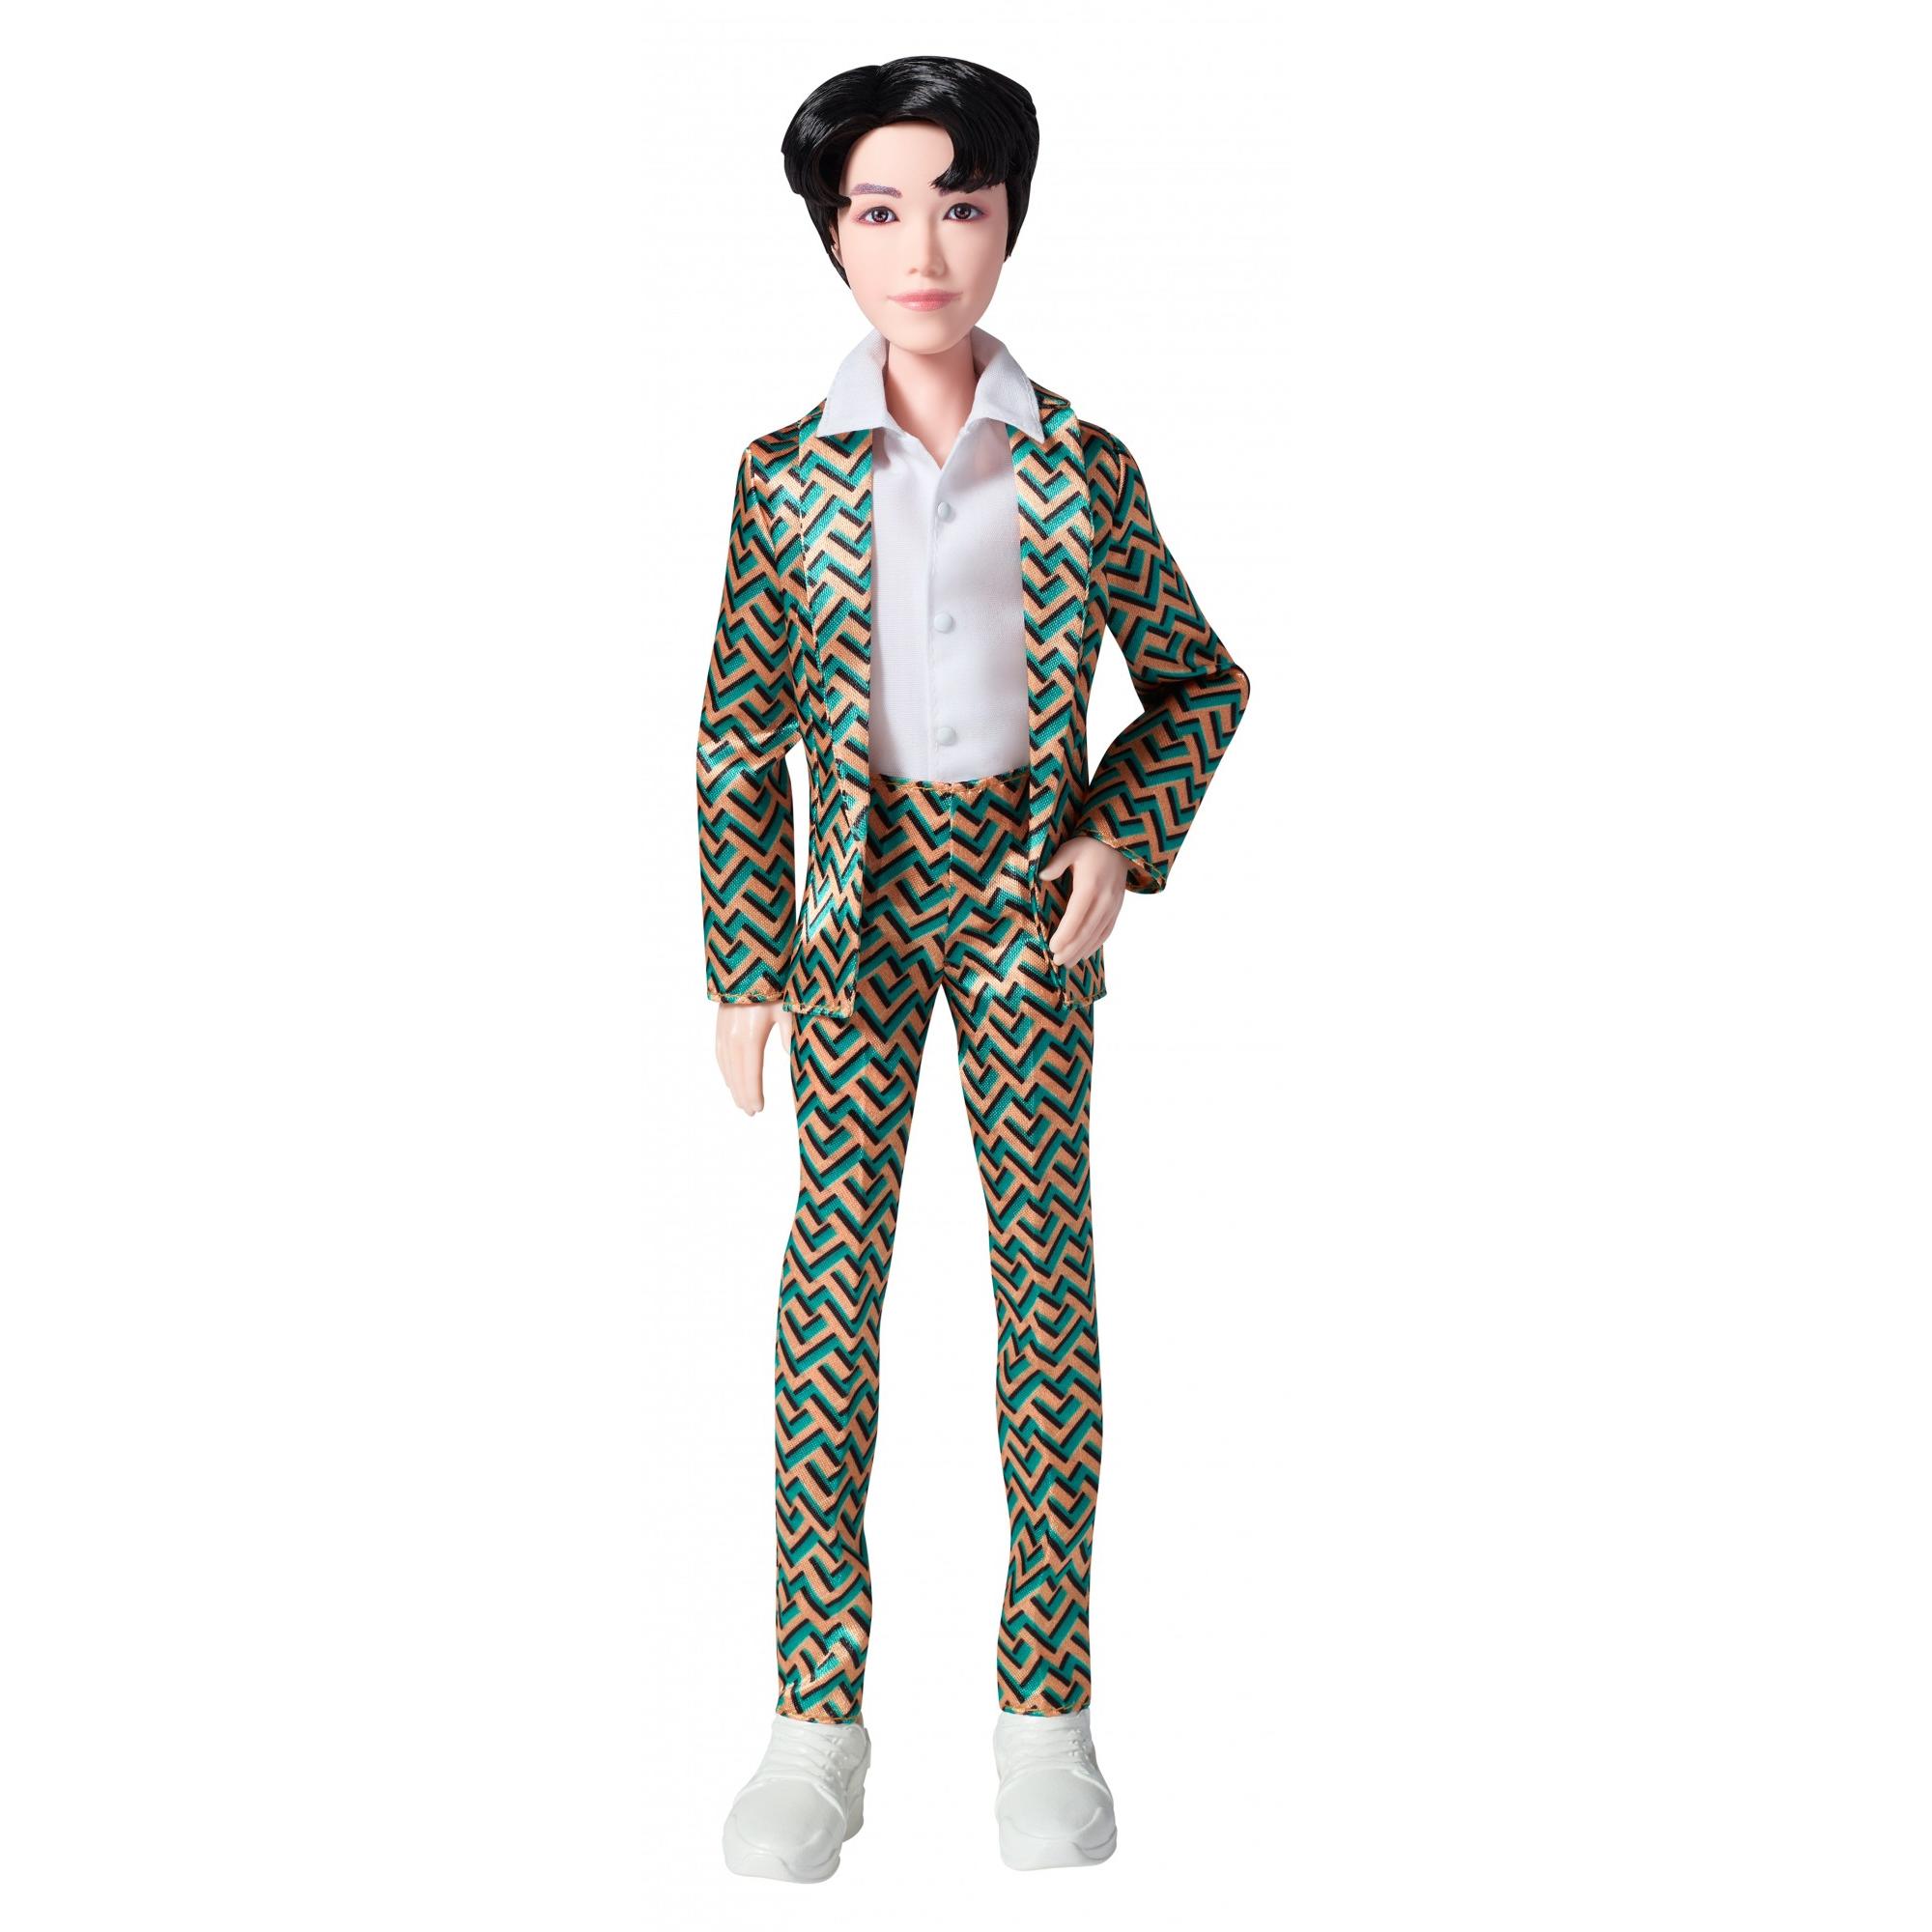 BTS j-hope Idol Doll - image 1 of 8